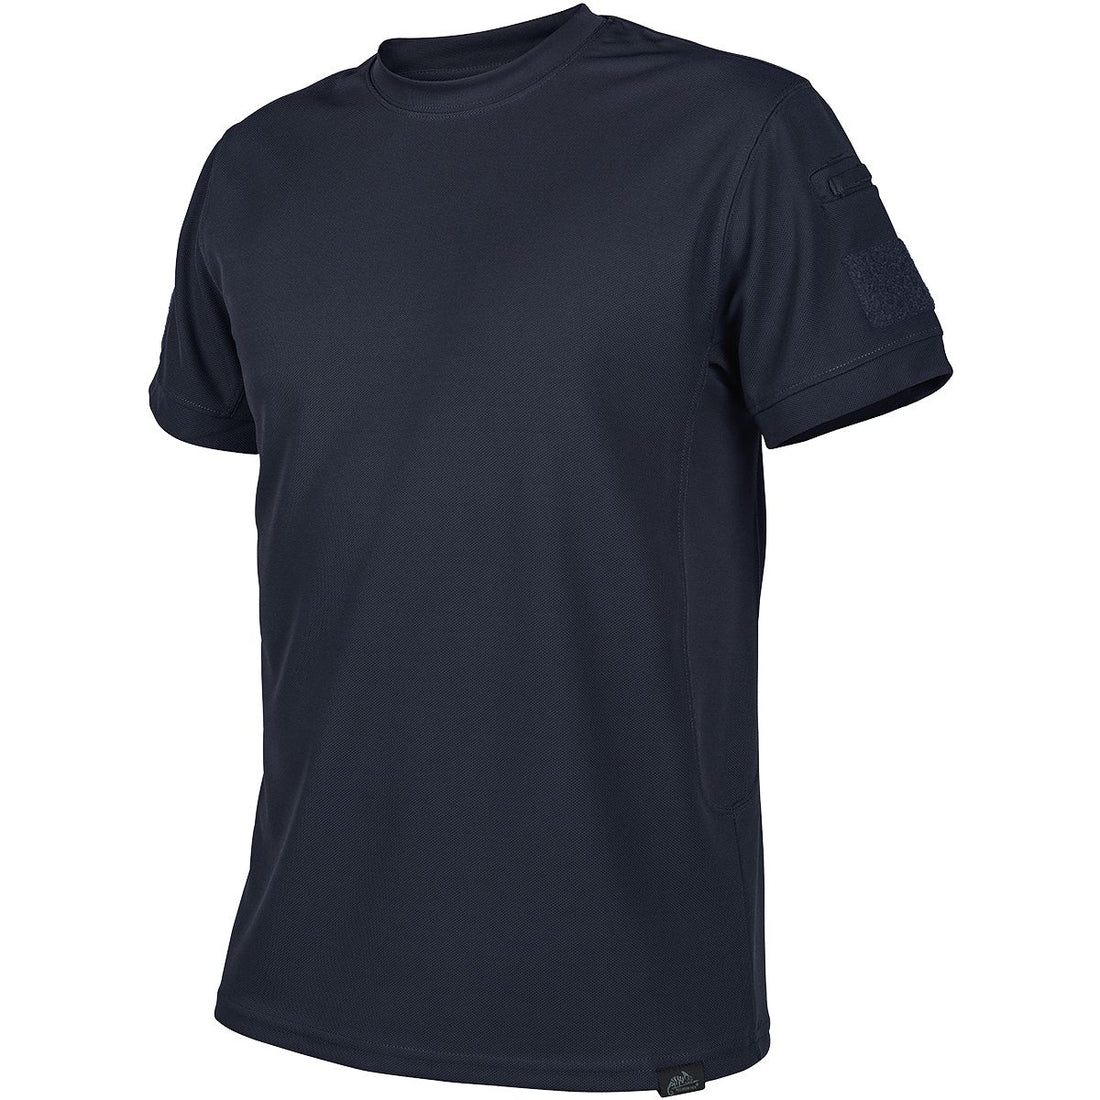 TACTICAL T-Shirt - TopCool قميص - Target KSA - متجر هدف